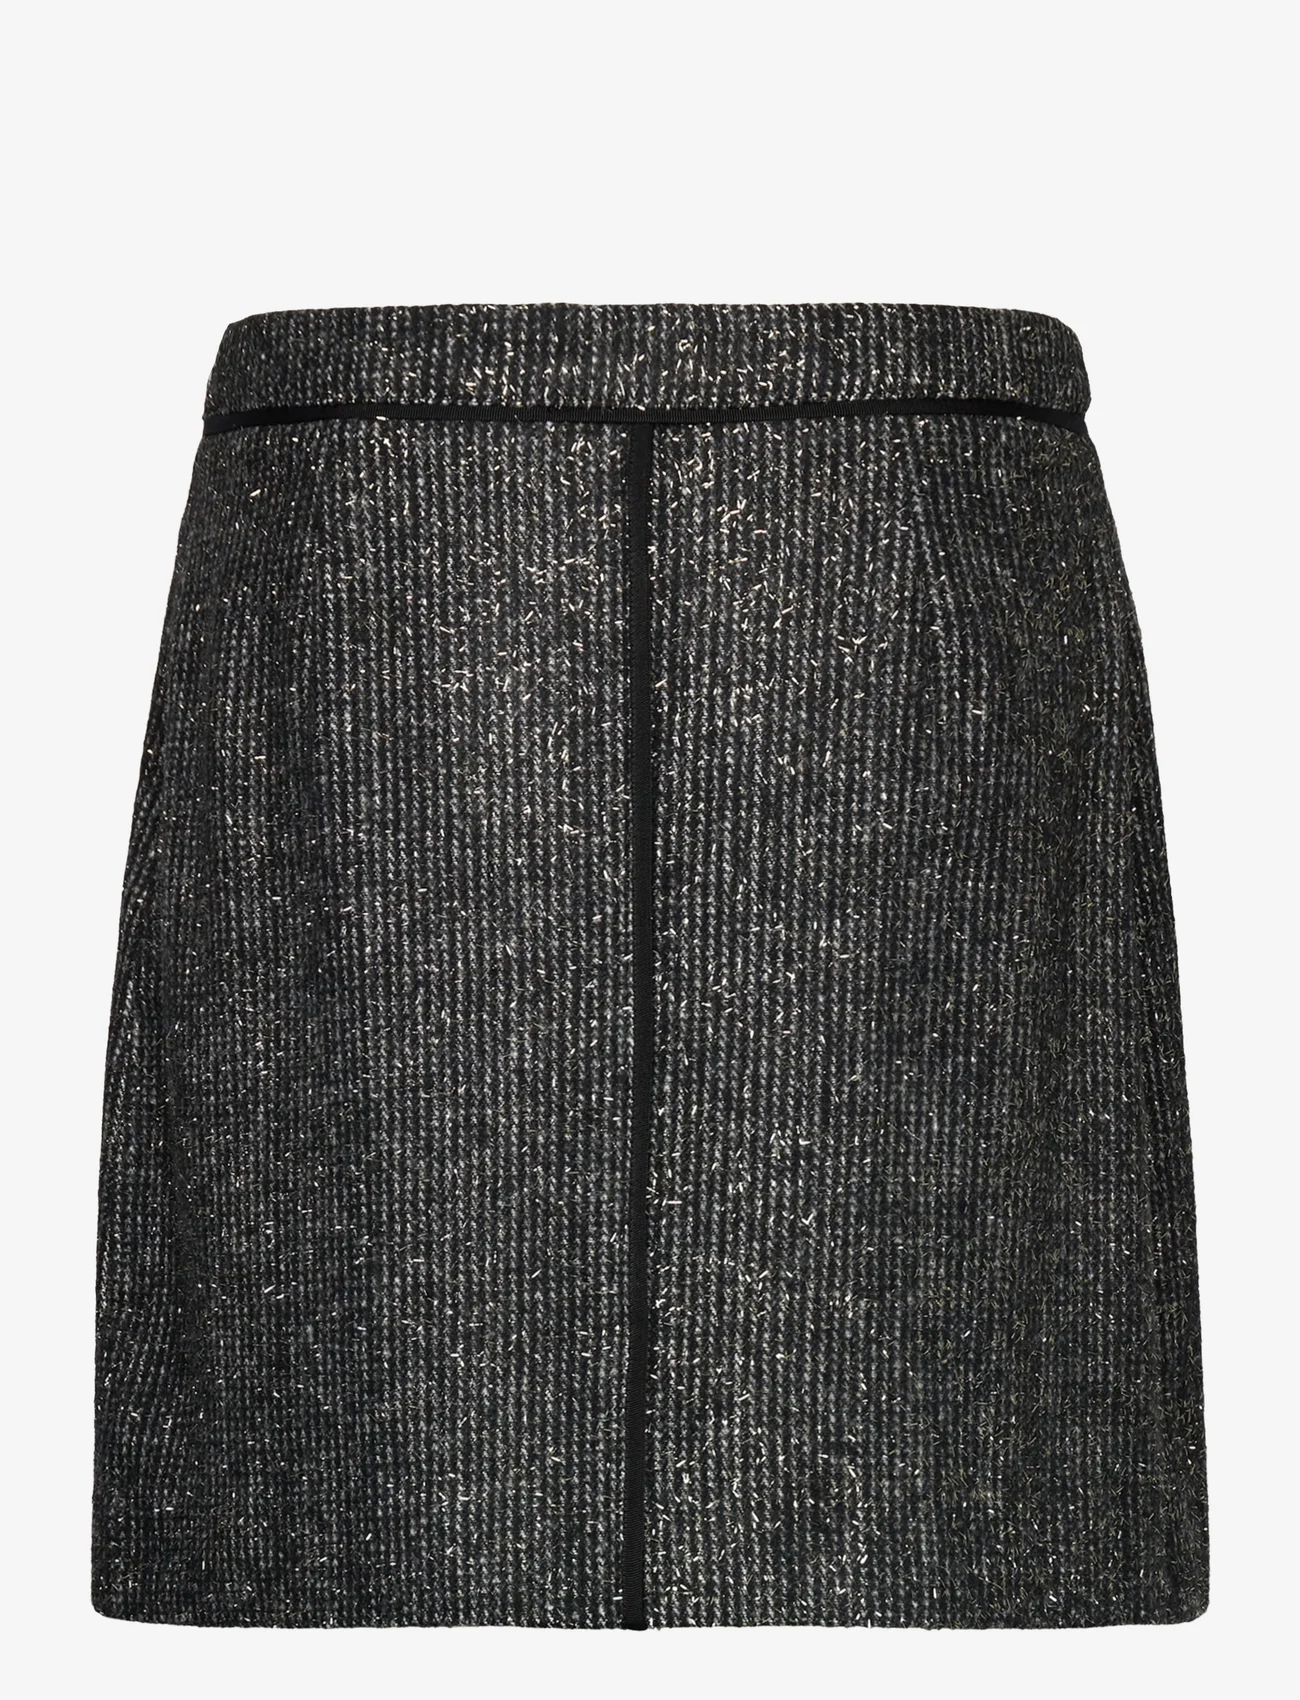 Bruuns Bazaar - BergeniaBBMabella skirt - short skirts - black - 1